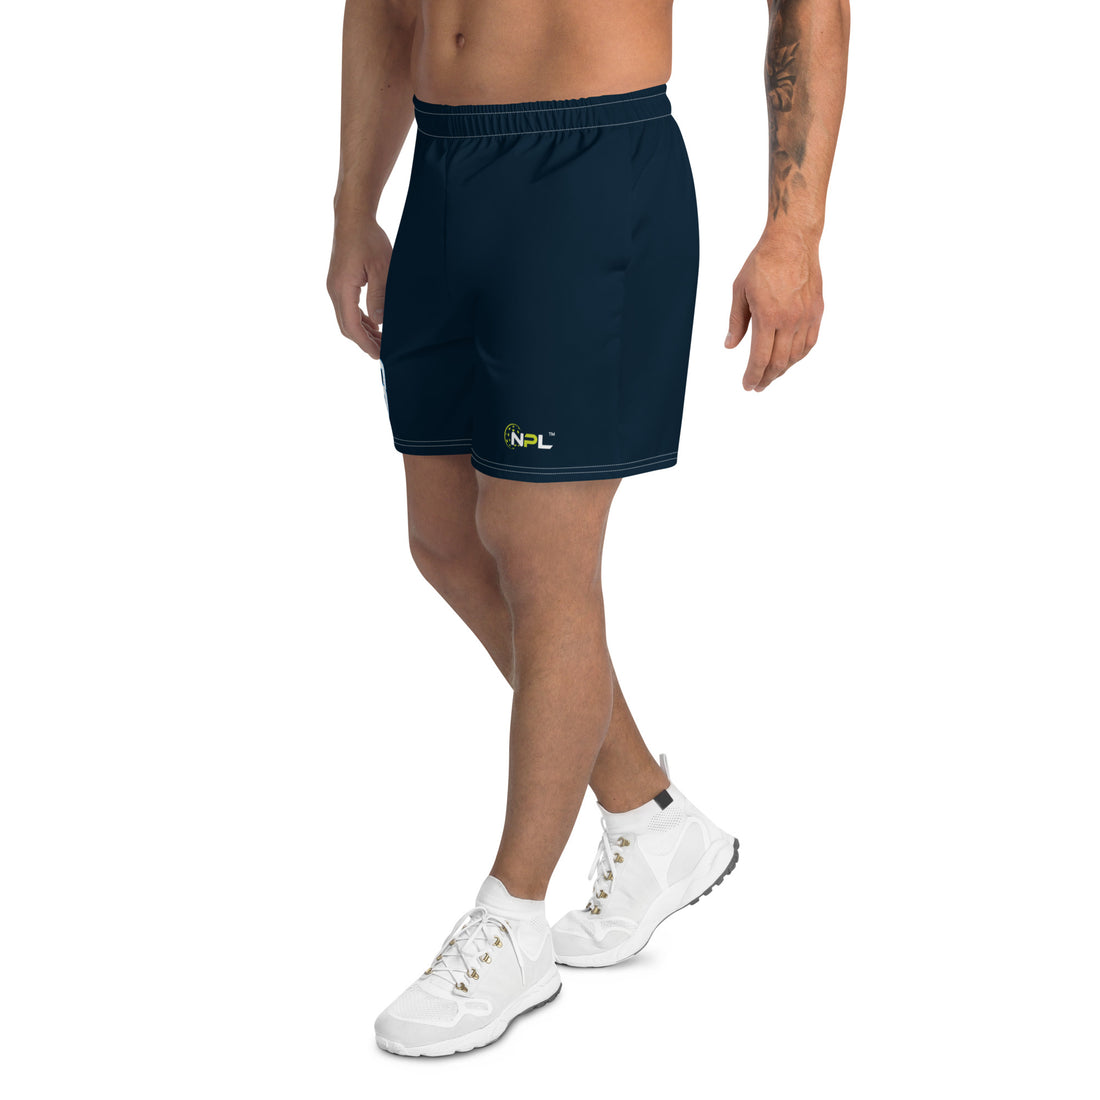 Daniel Gold 28 Boca Raton Picklers™ SKYblue™ 2023 Authentic Shorts for Men